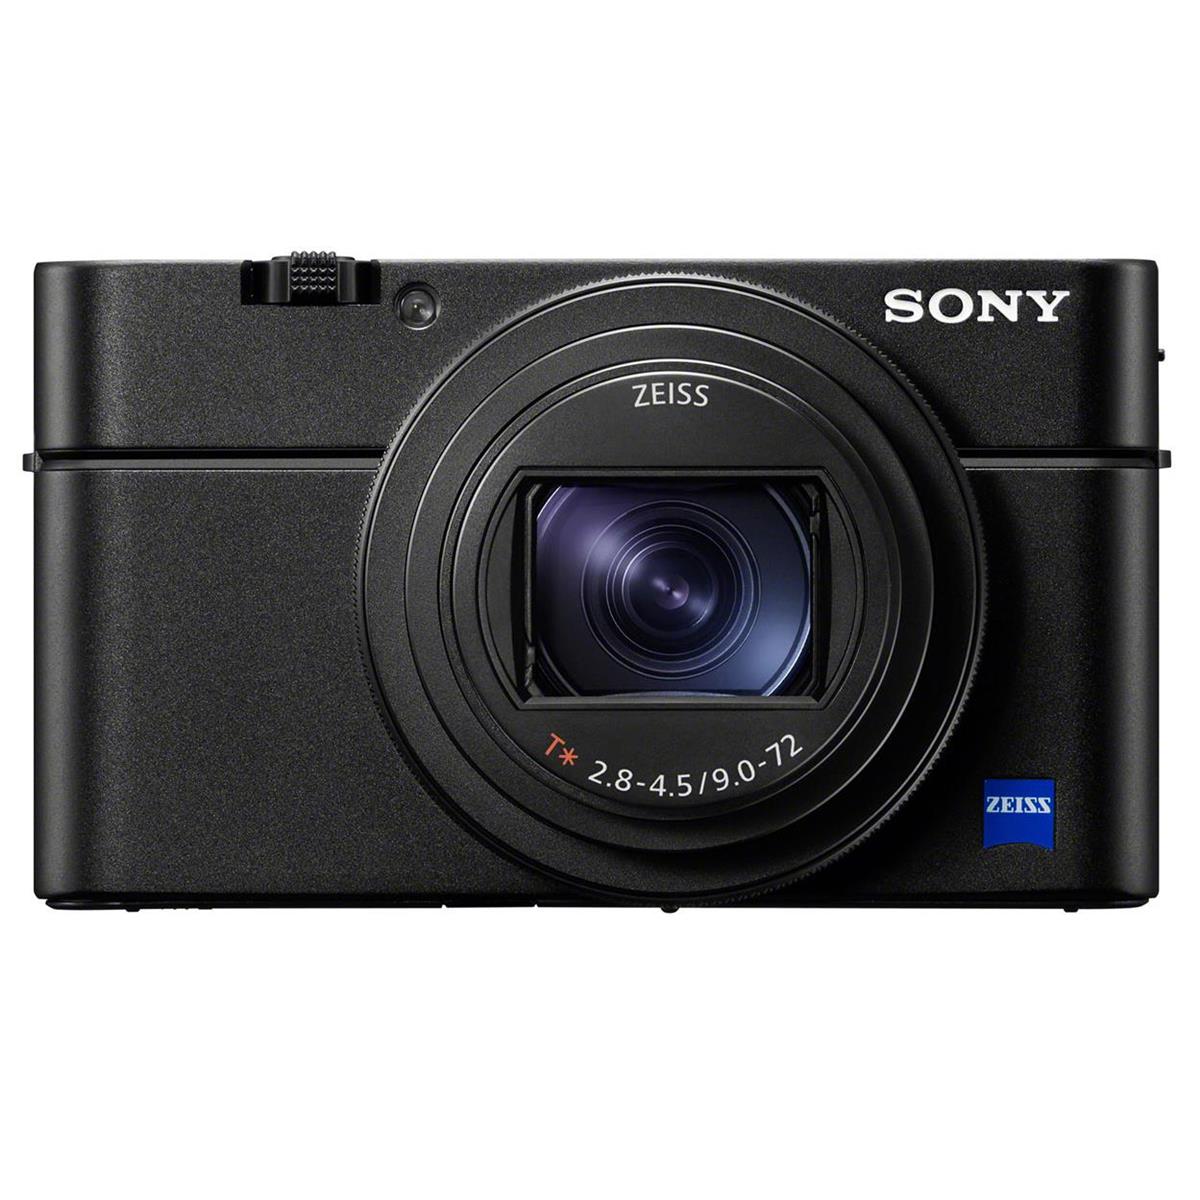 Sony DSC- RX100 VII Cyber-shot Digital Camera